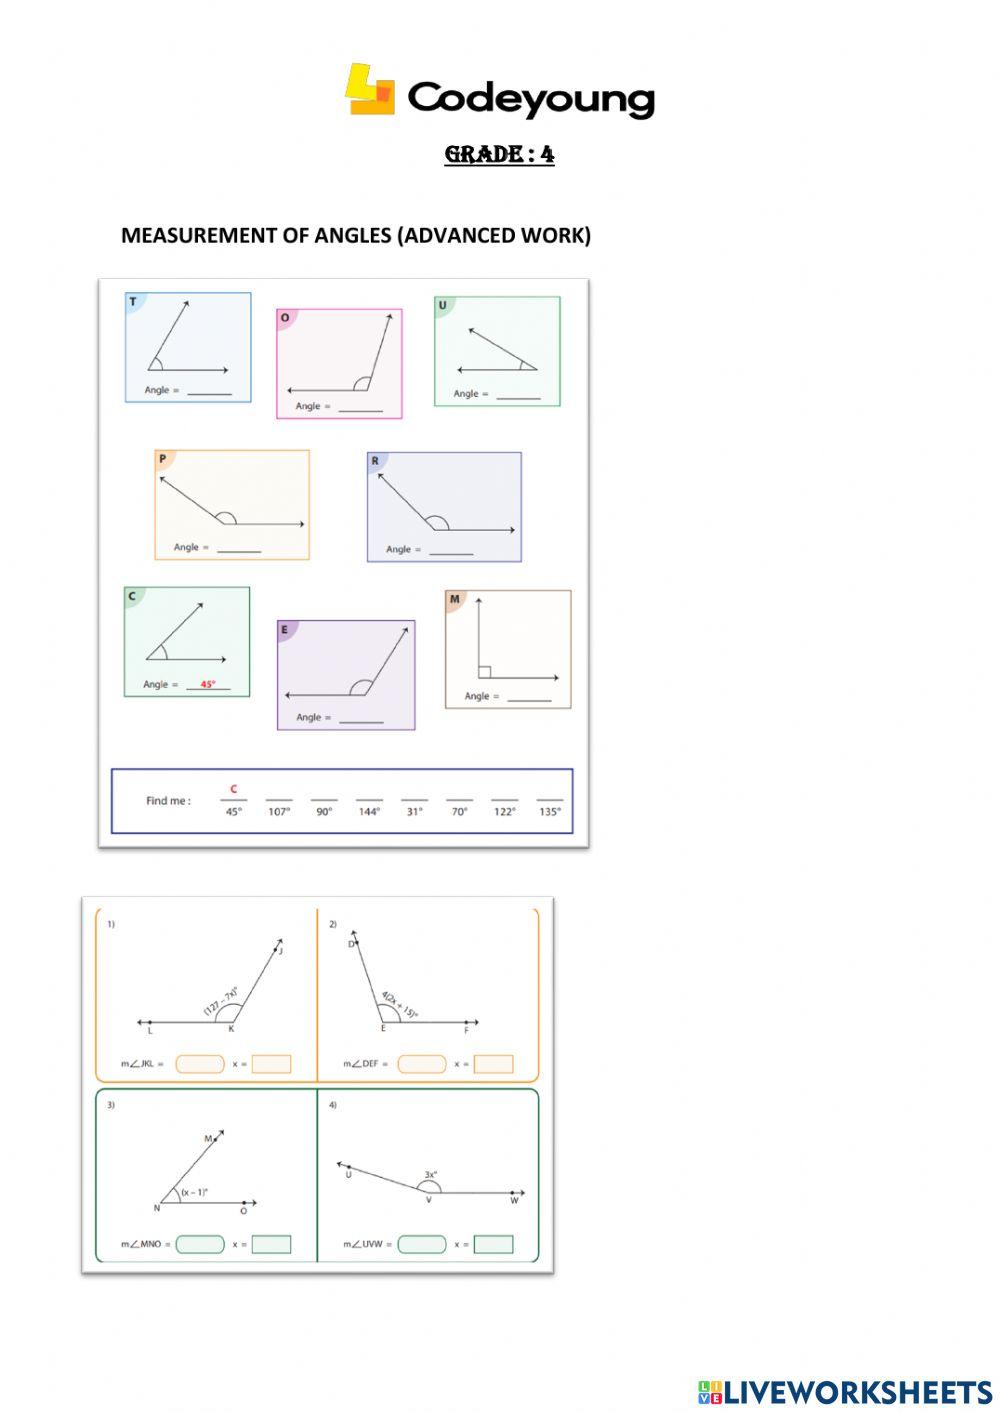 Measurement of angles (advanced work)